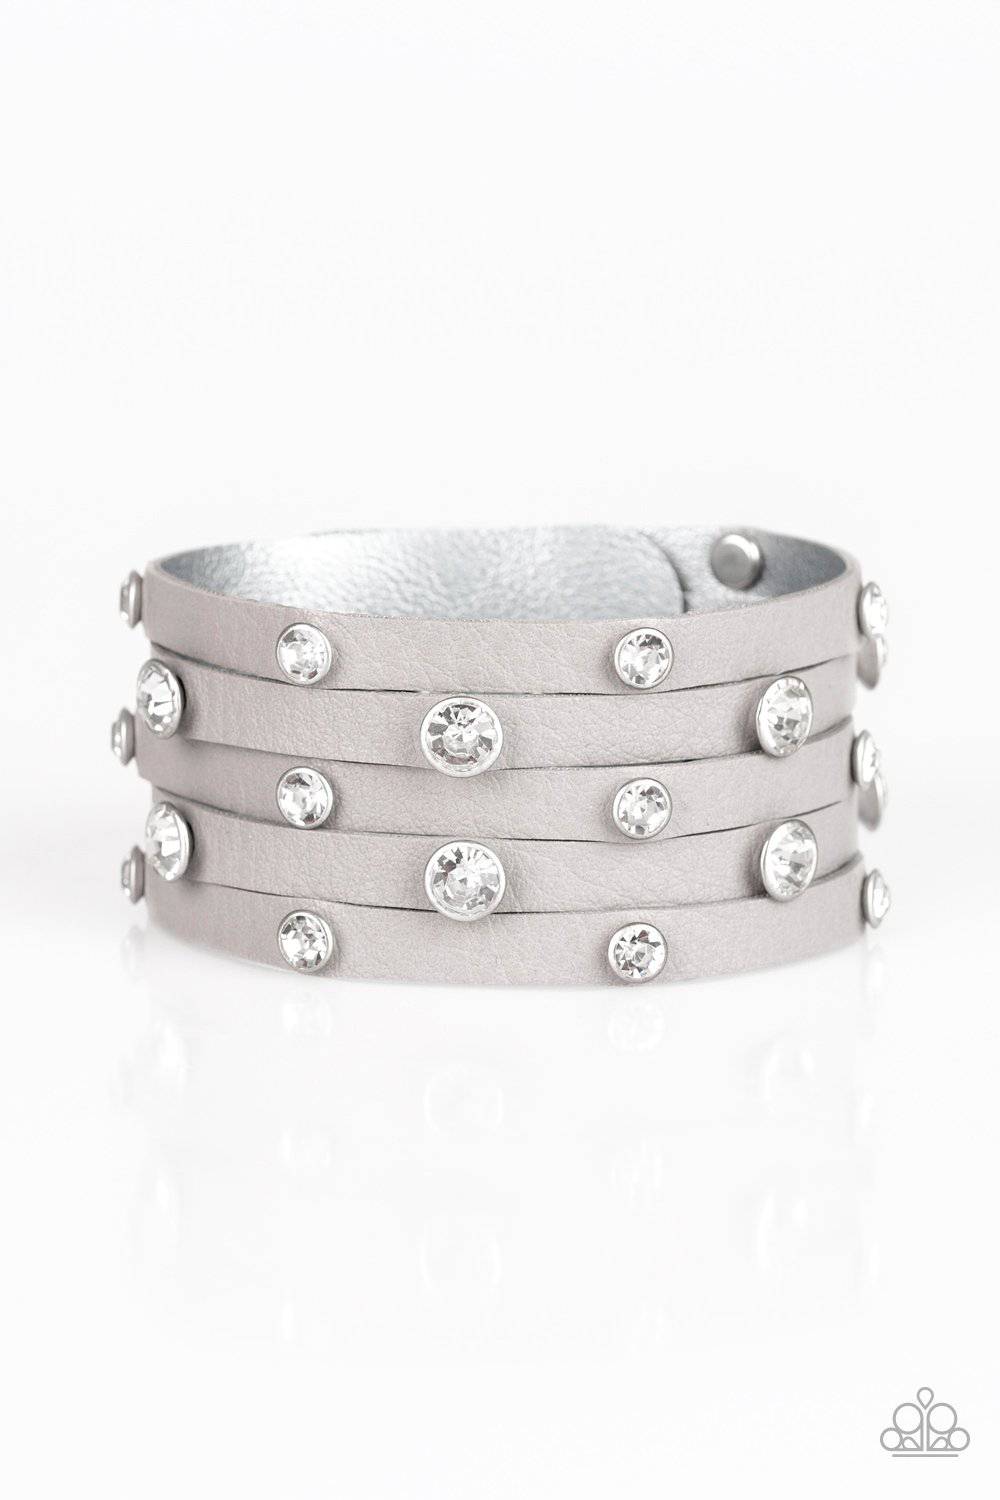 Rhinestone Reputation - Silver and Rhinestone Wrap Bracelet - Paparazzi Accessories - GlaMarous Titi Jewels